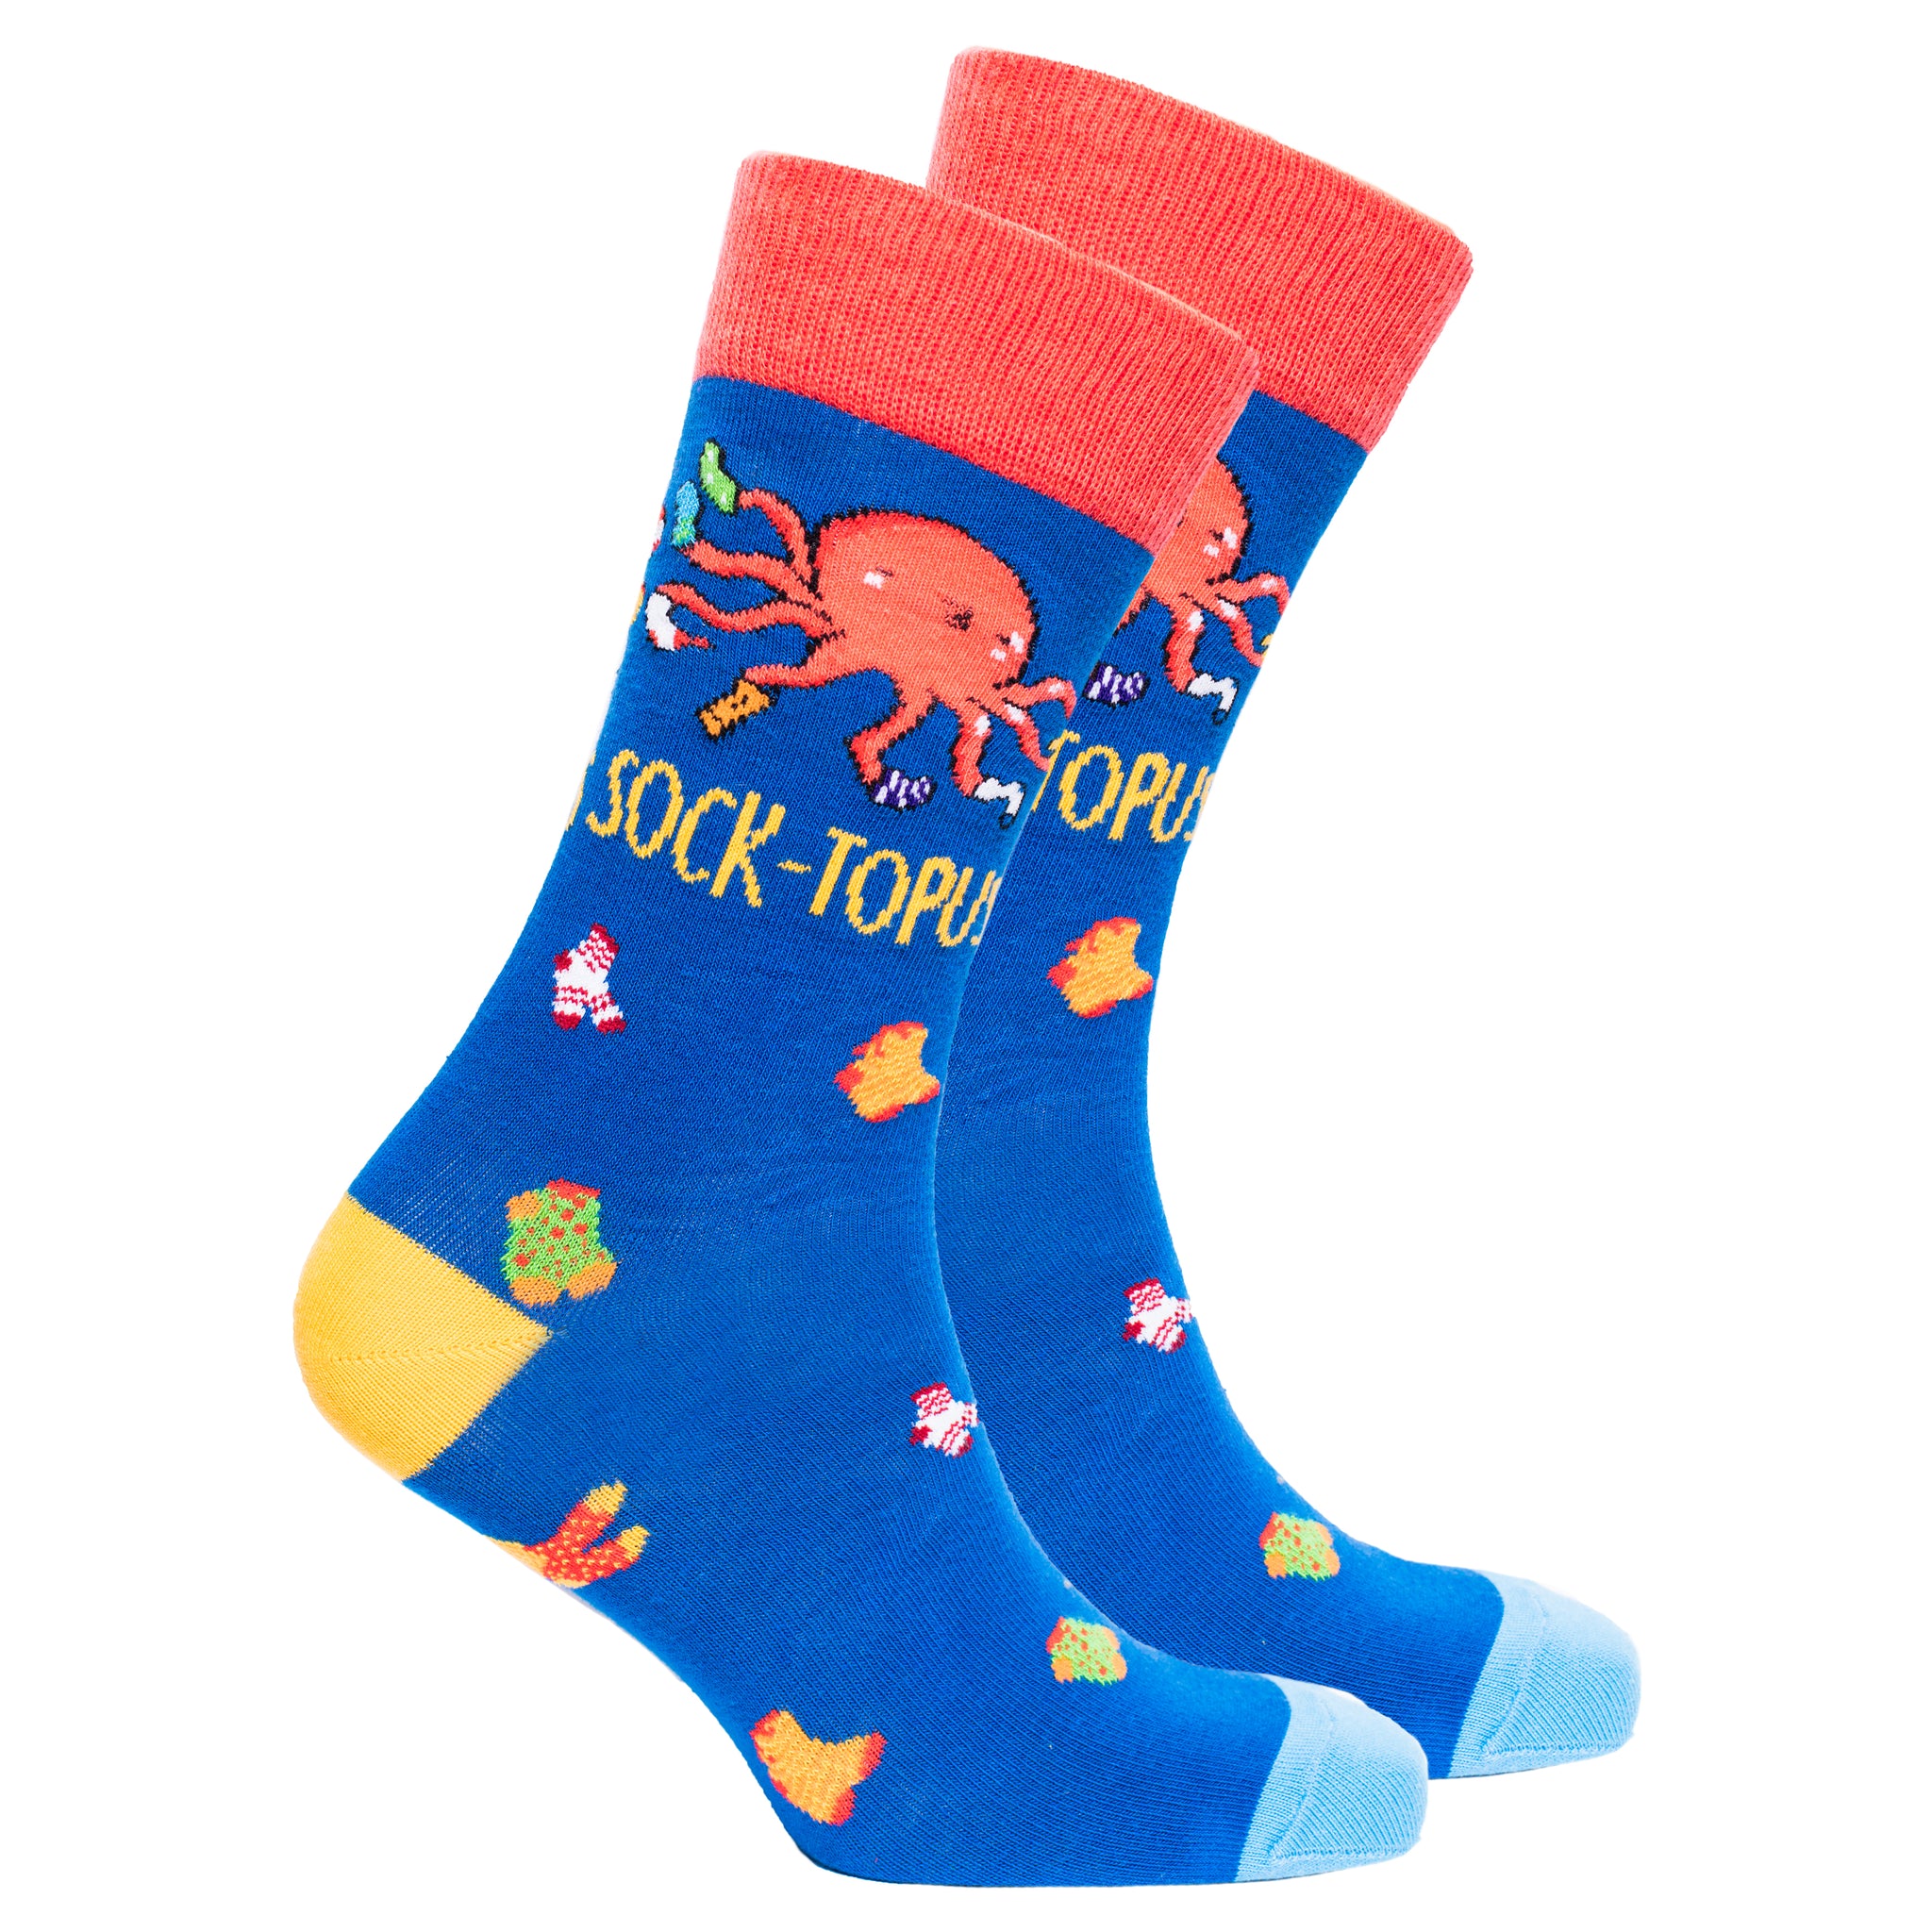 Men's Sock-topus Socks